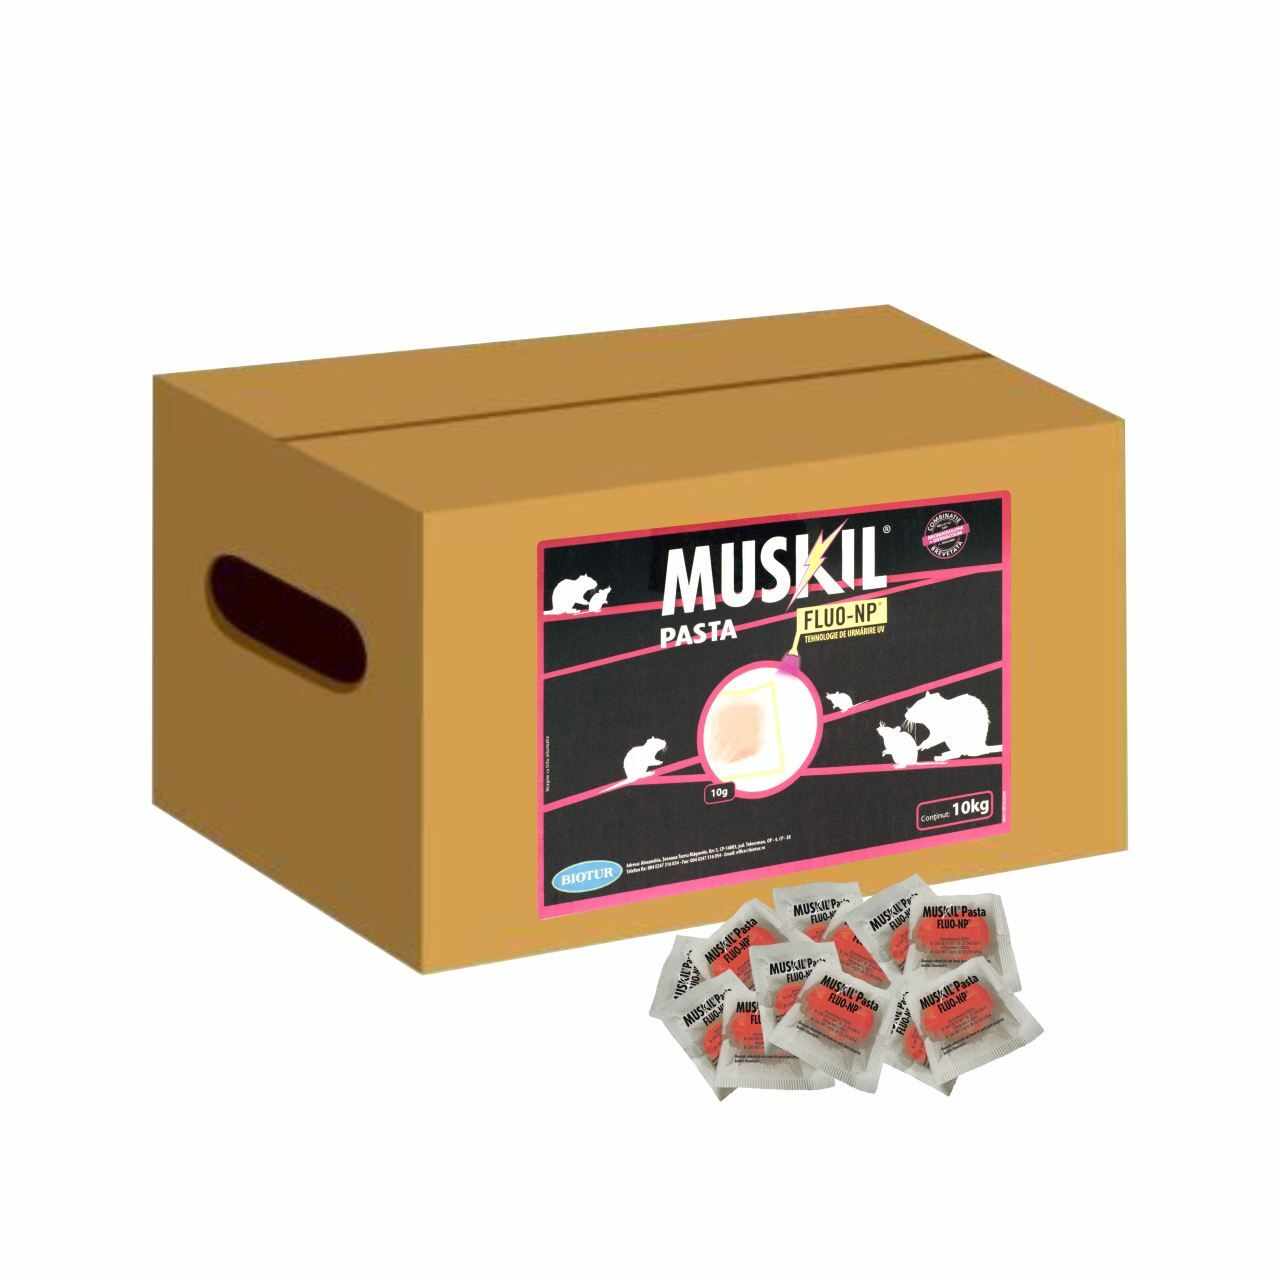 Muskil - Pasta Fluorescenta 10kg Pret/cutie